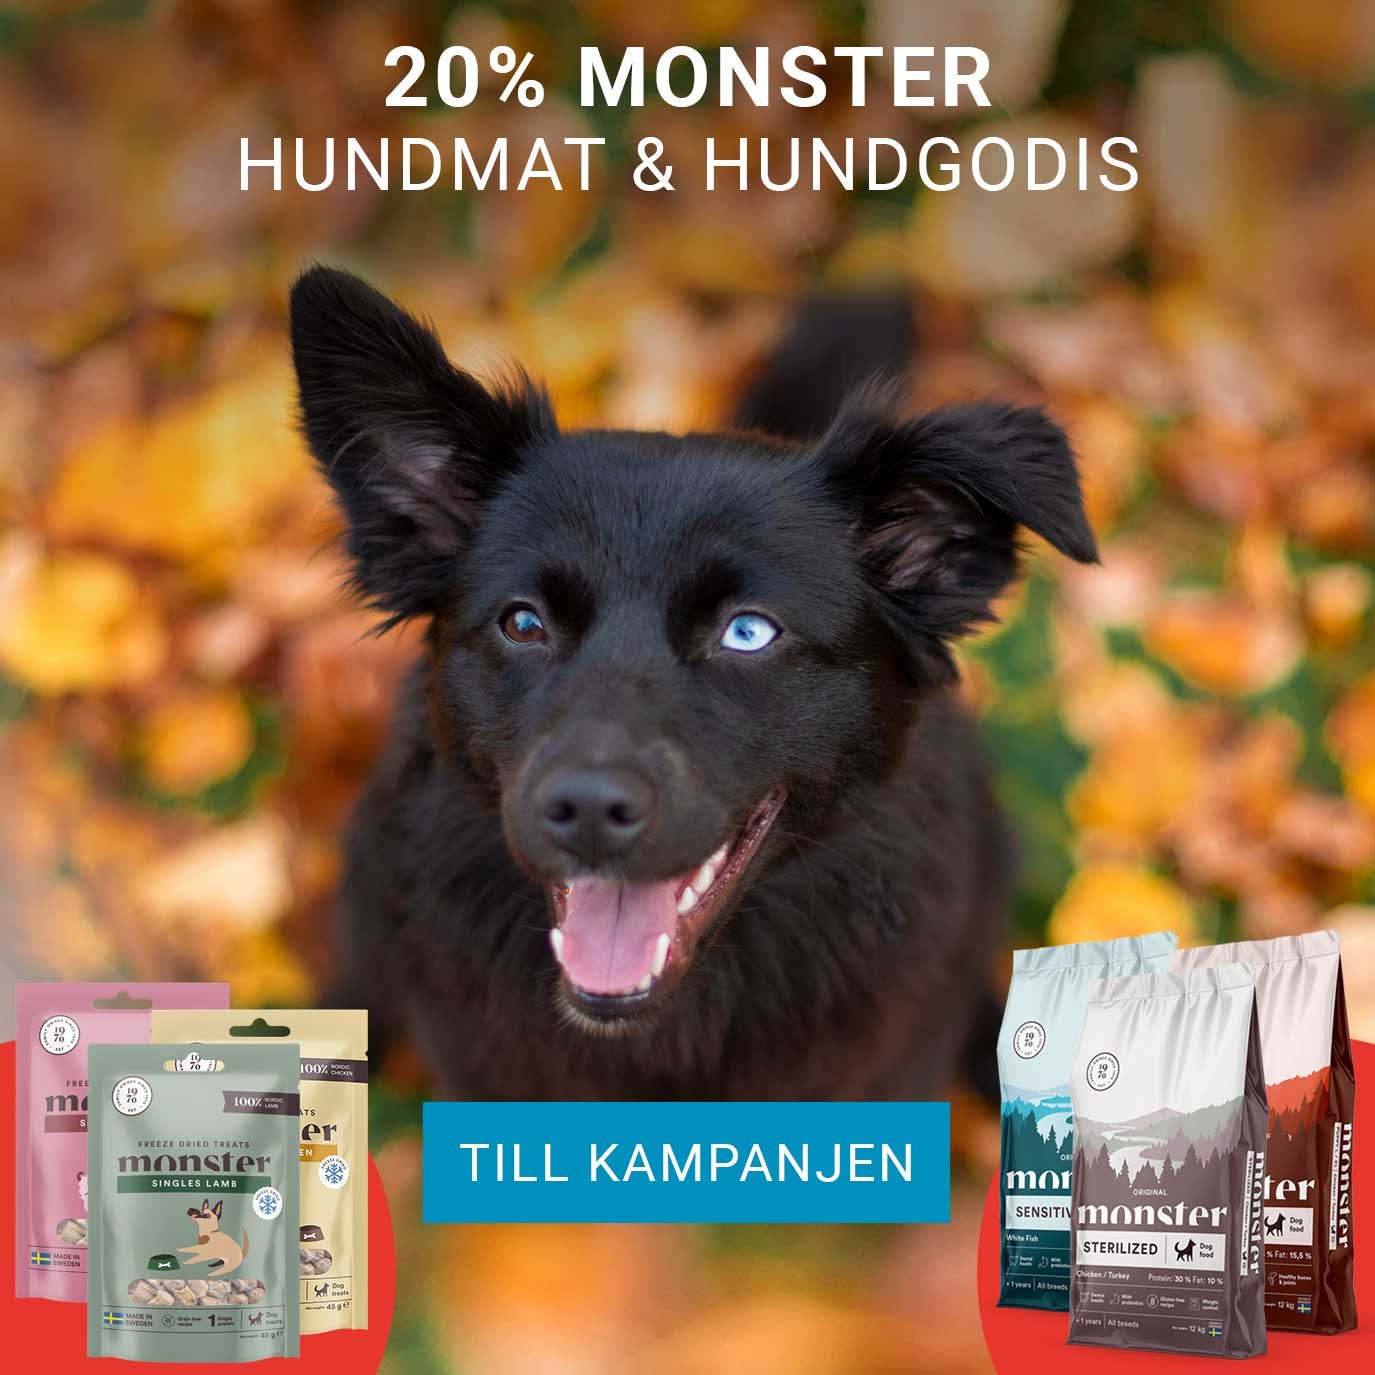 Kampanj 20% Monster hundgodis & hundmat